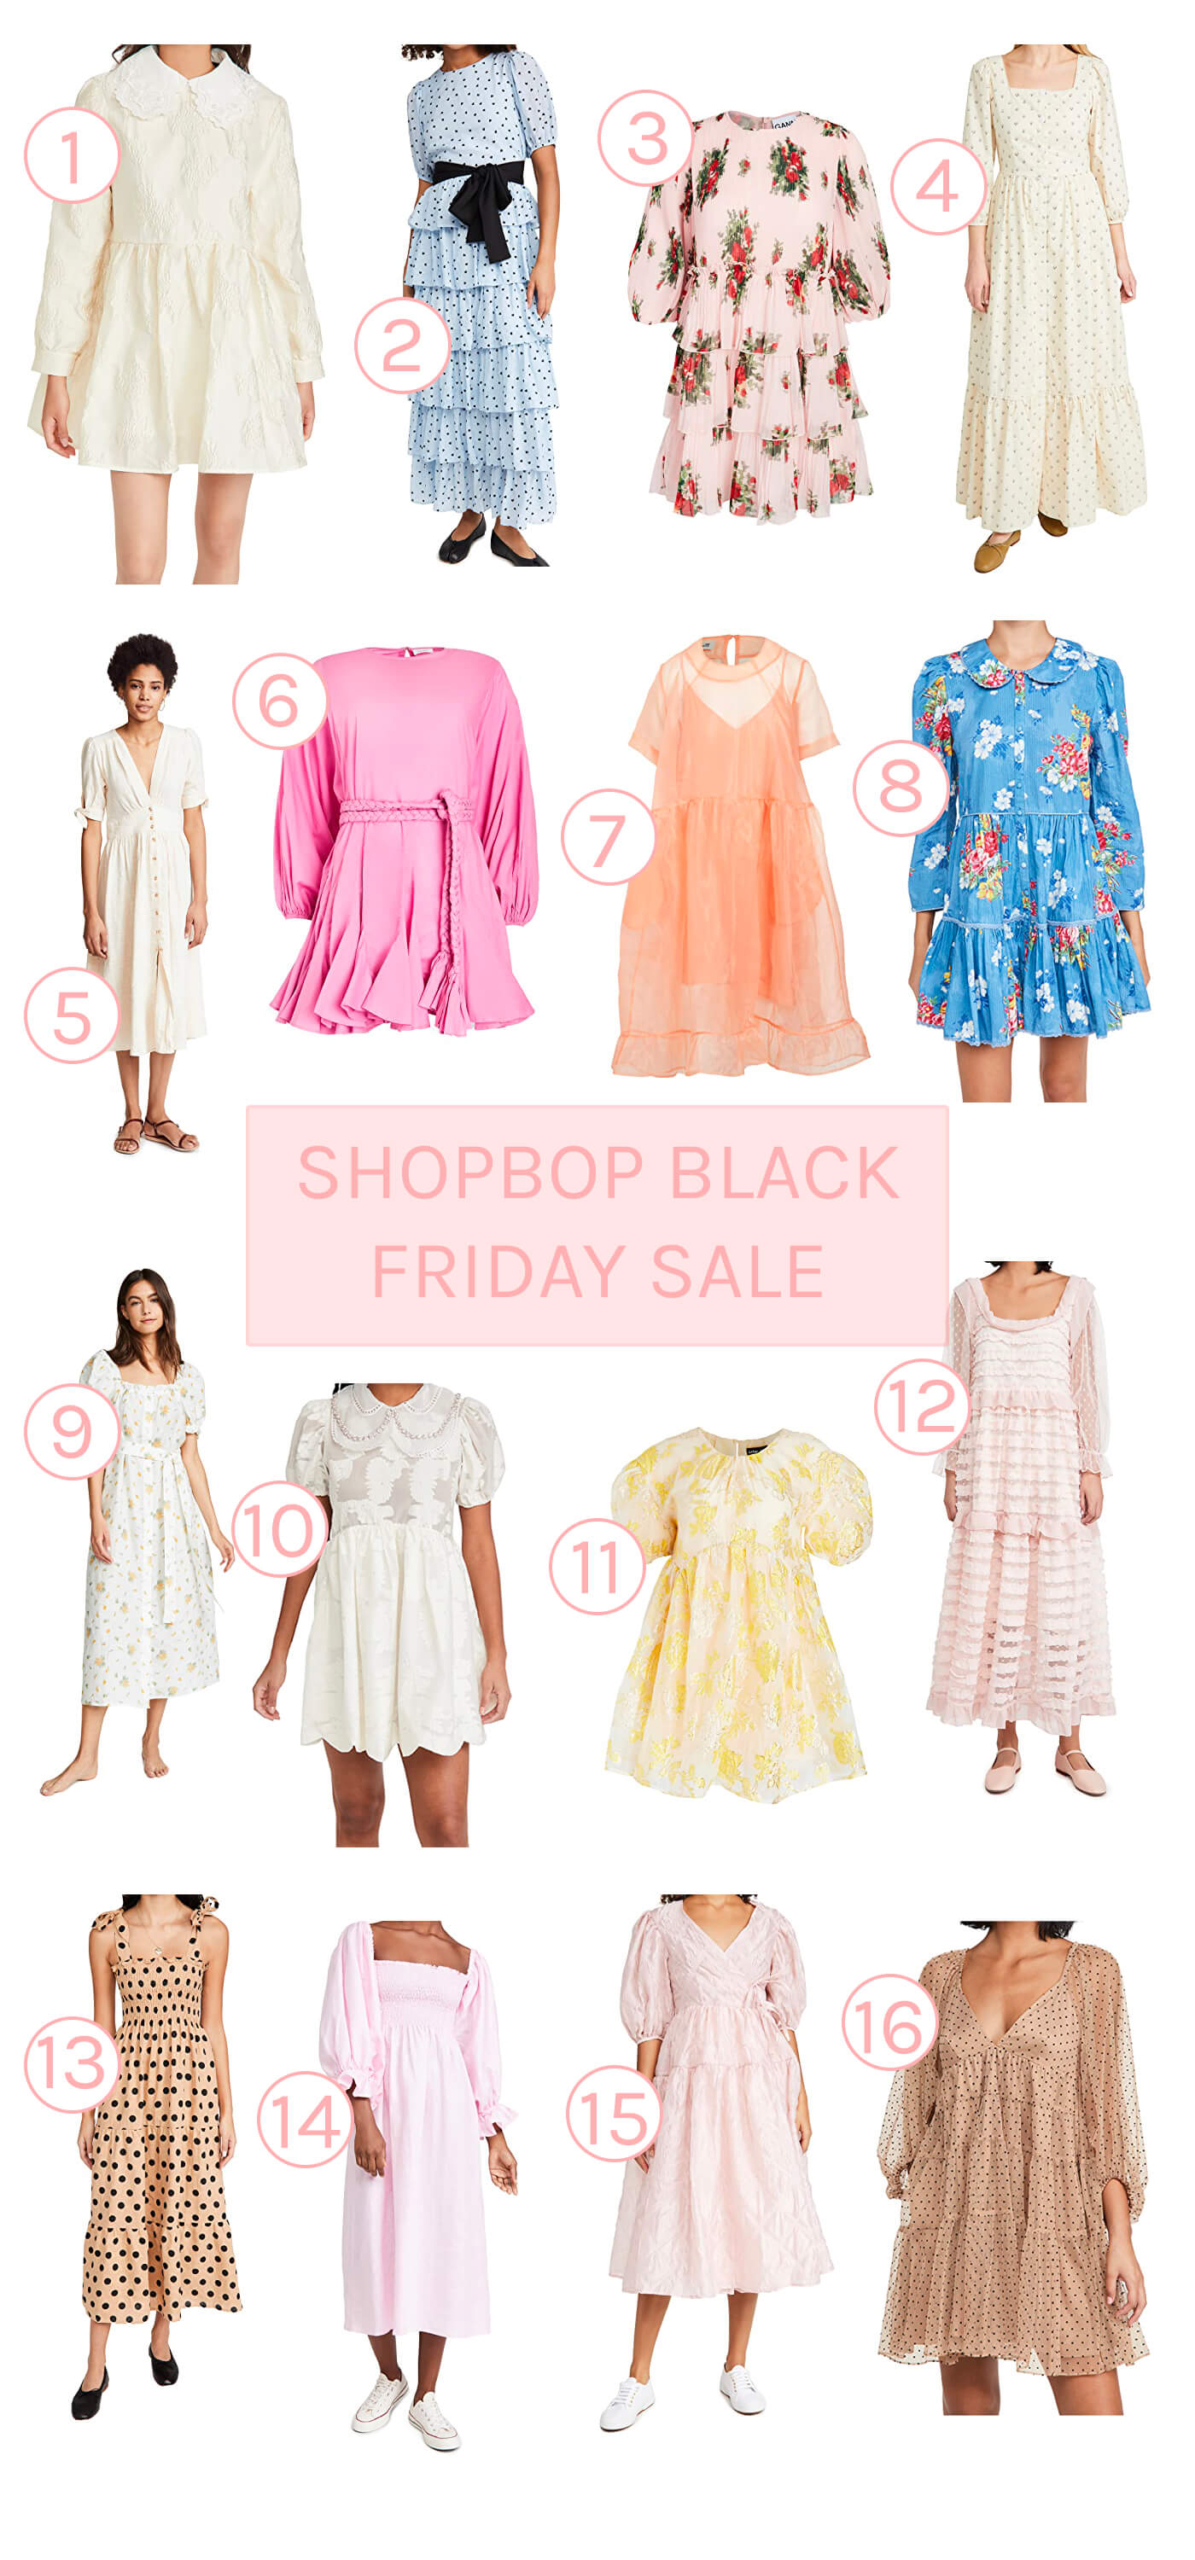 Shopbop Black Friday Sale Picks